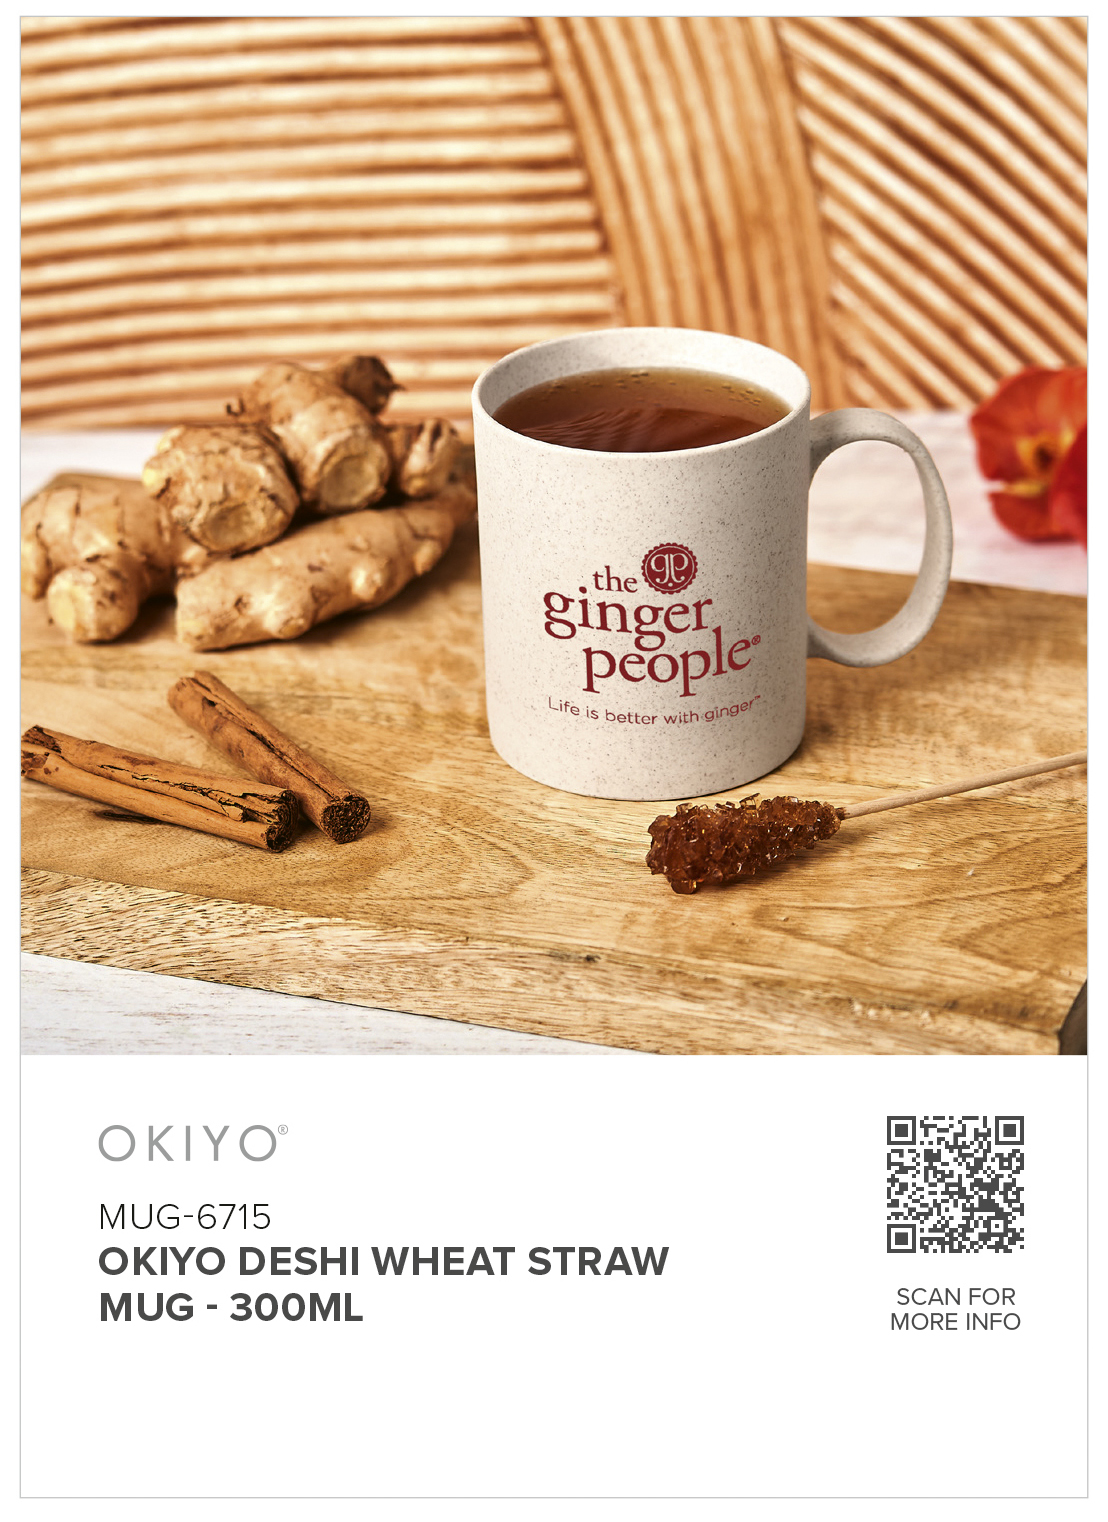 Okiyo Deshi Wheat Straw Mug- 300ml CATALOGUE_IMAGE